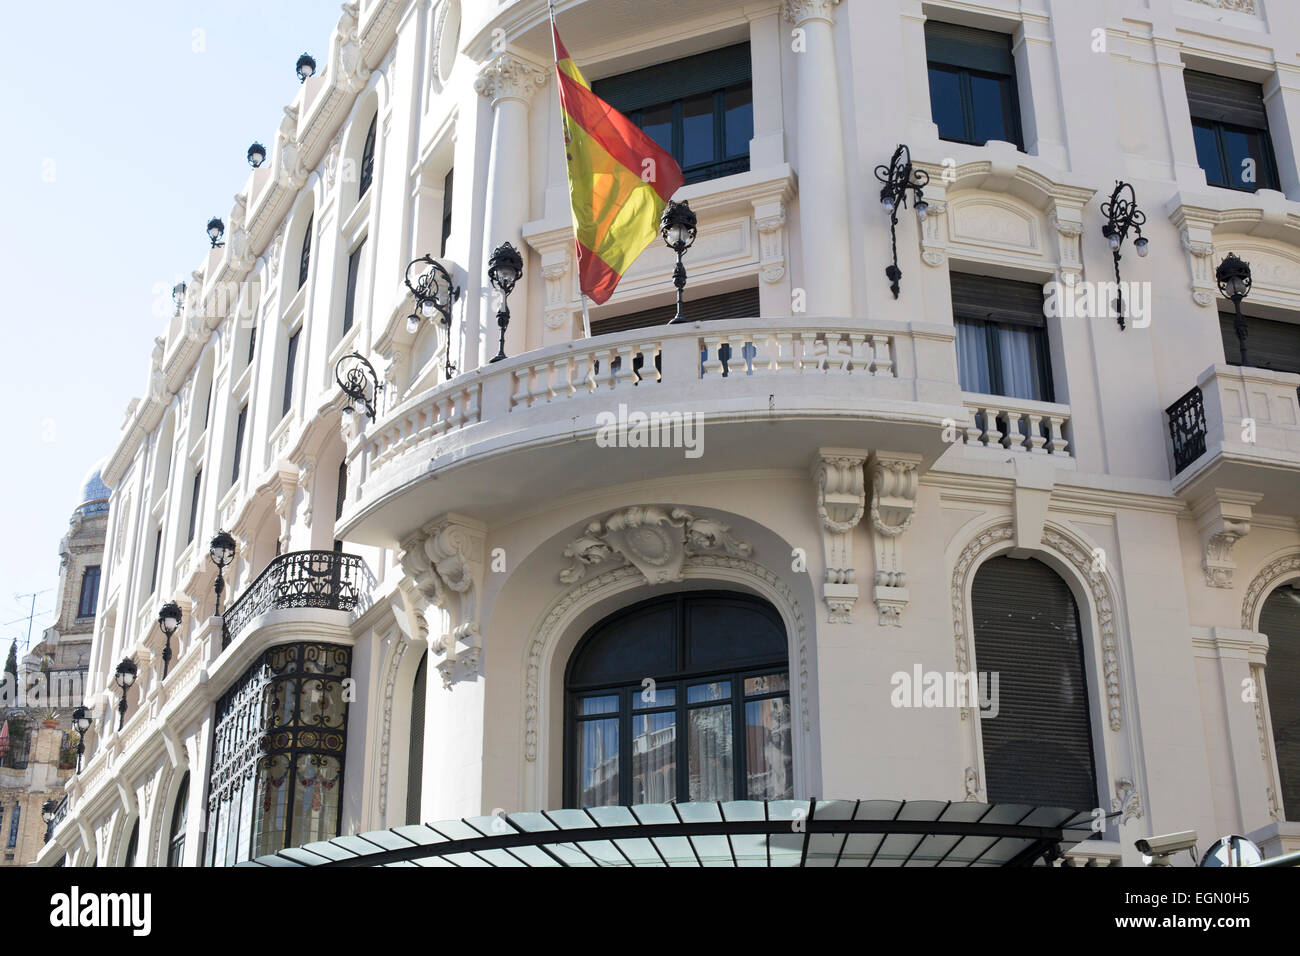 Madrid Spain Spanish architecture architectural Stock Photo